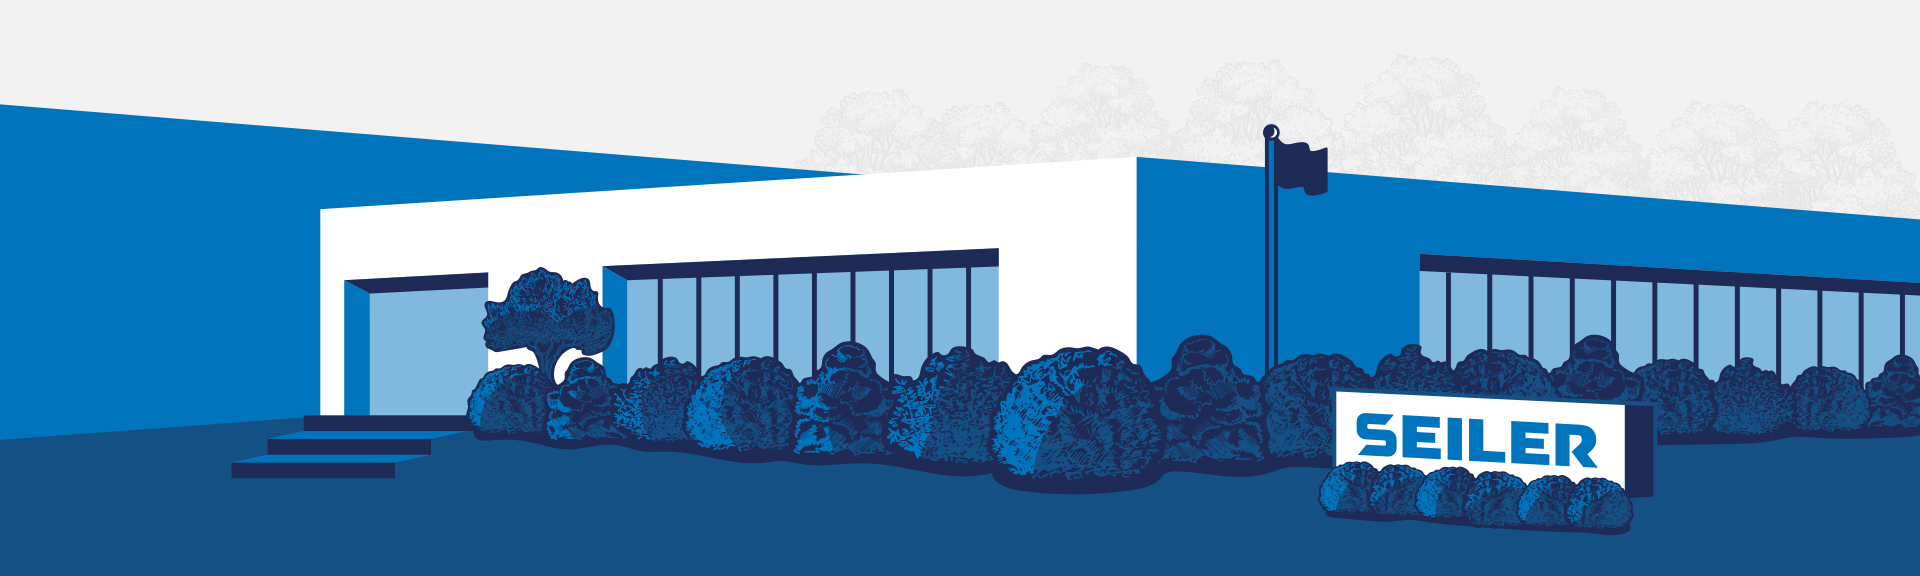 Digital Illustration of Seiler Headquarters in St. Louis Missouri